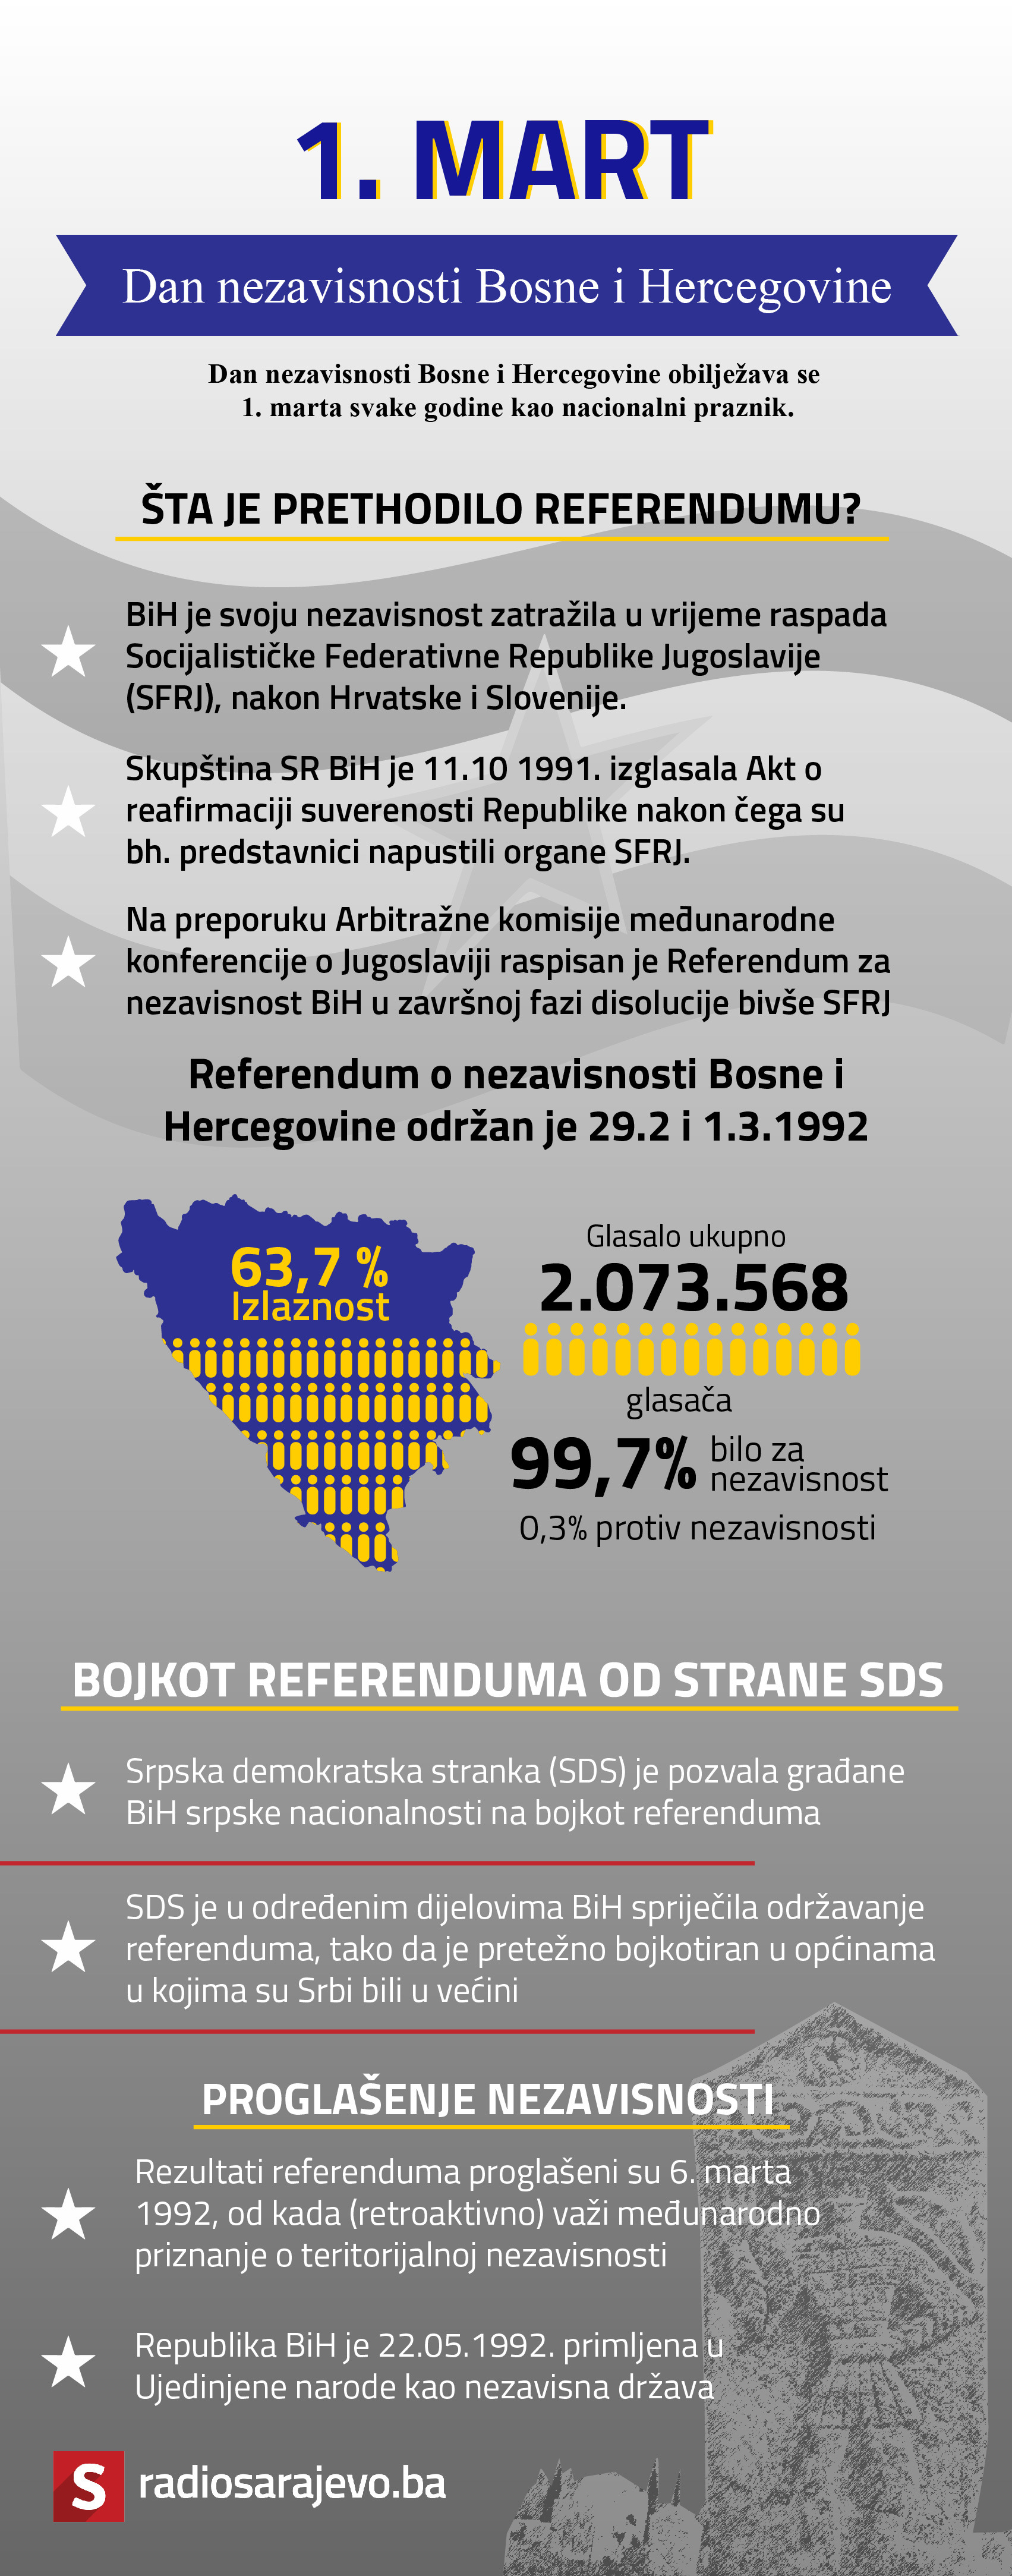 Dan_nezavisnosti_infografika_SL_RSA.jpg - undefined